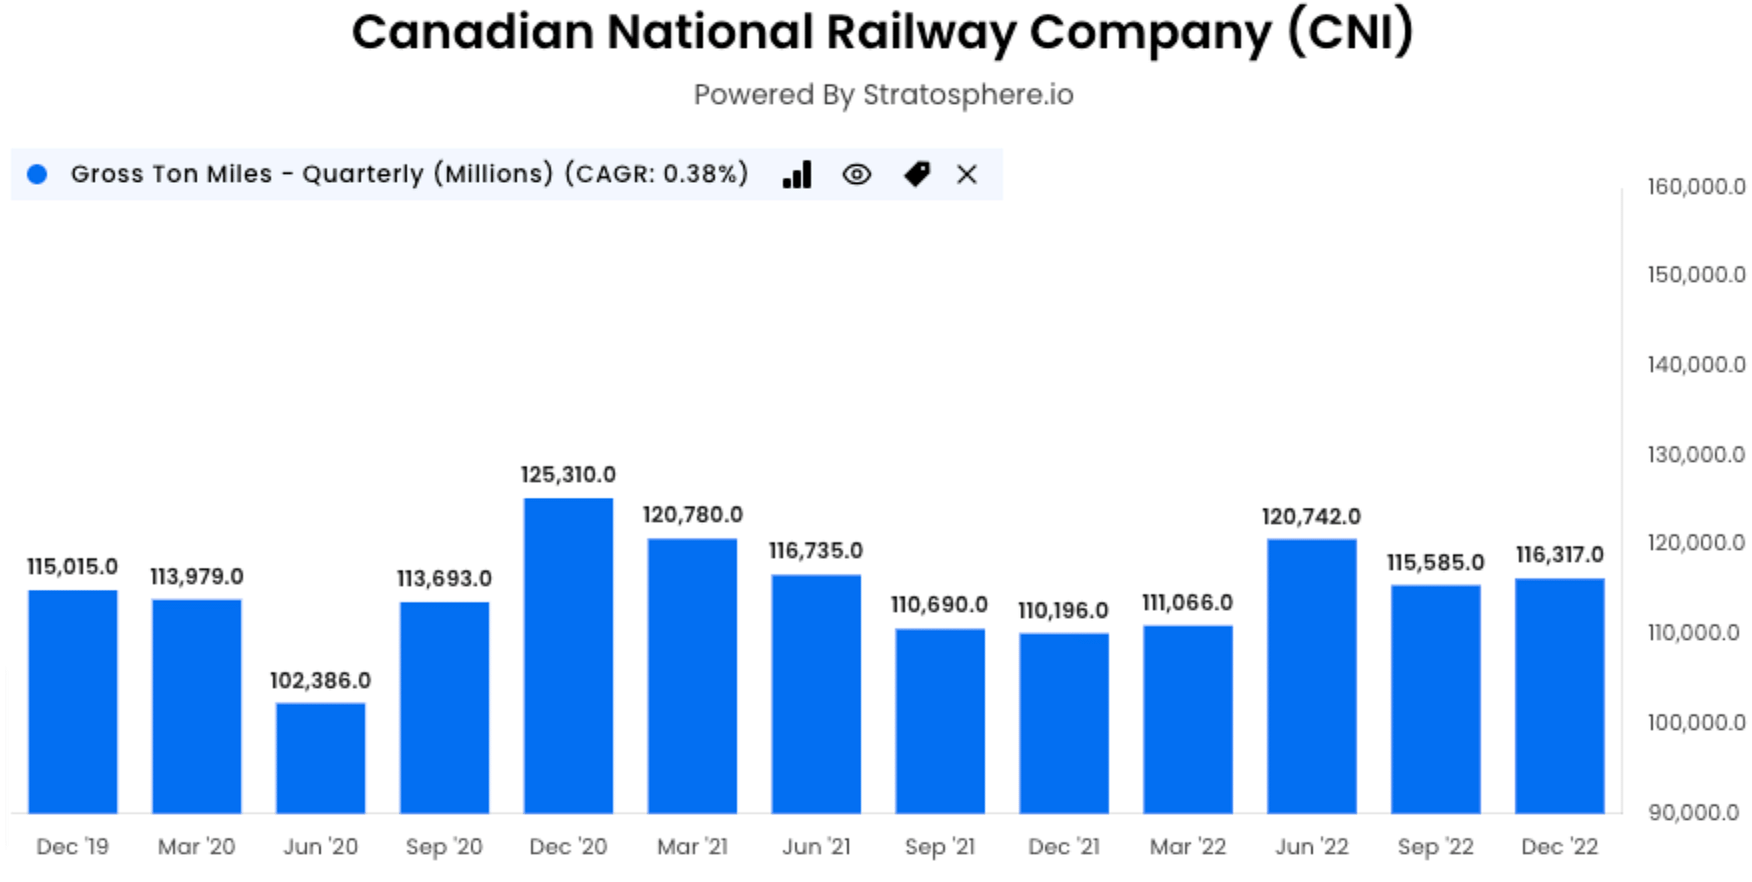 Canadian National Railway Company gross ton miles graph